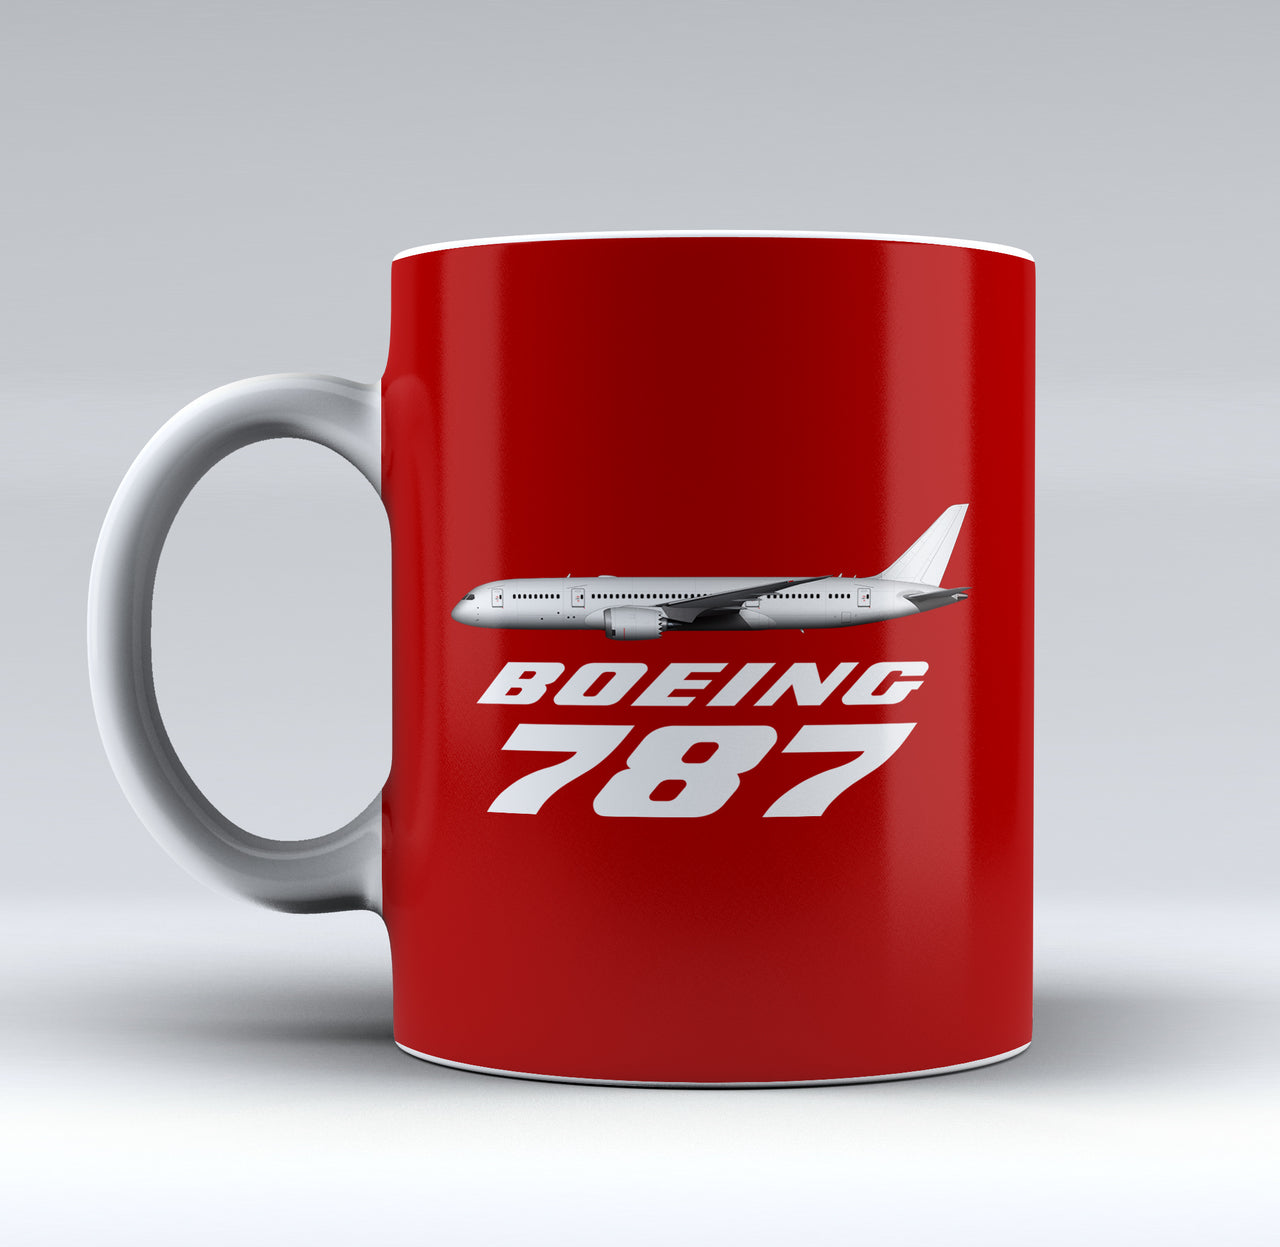 The Boeing 787 Designed Mugs